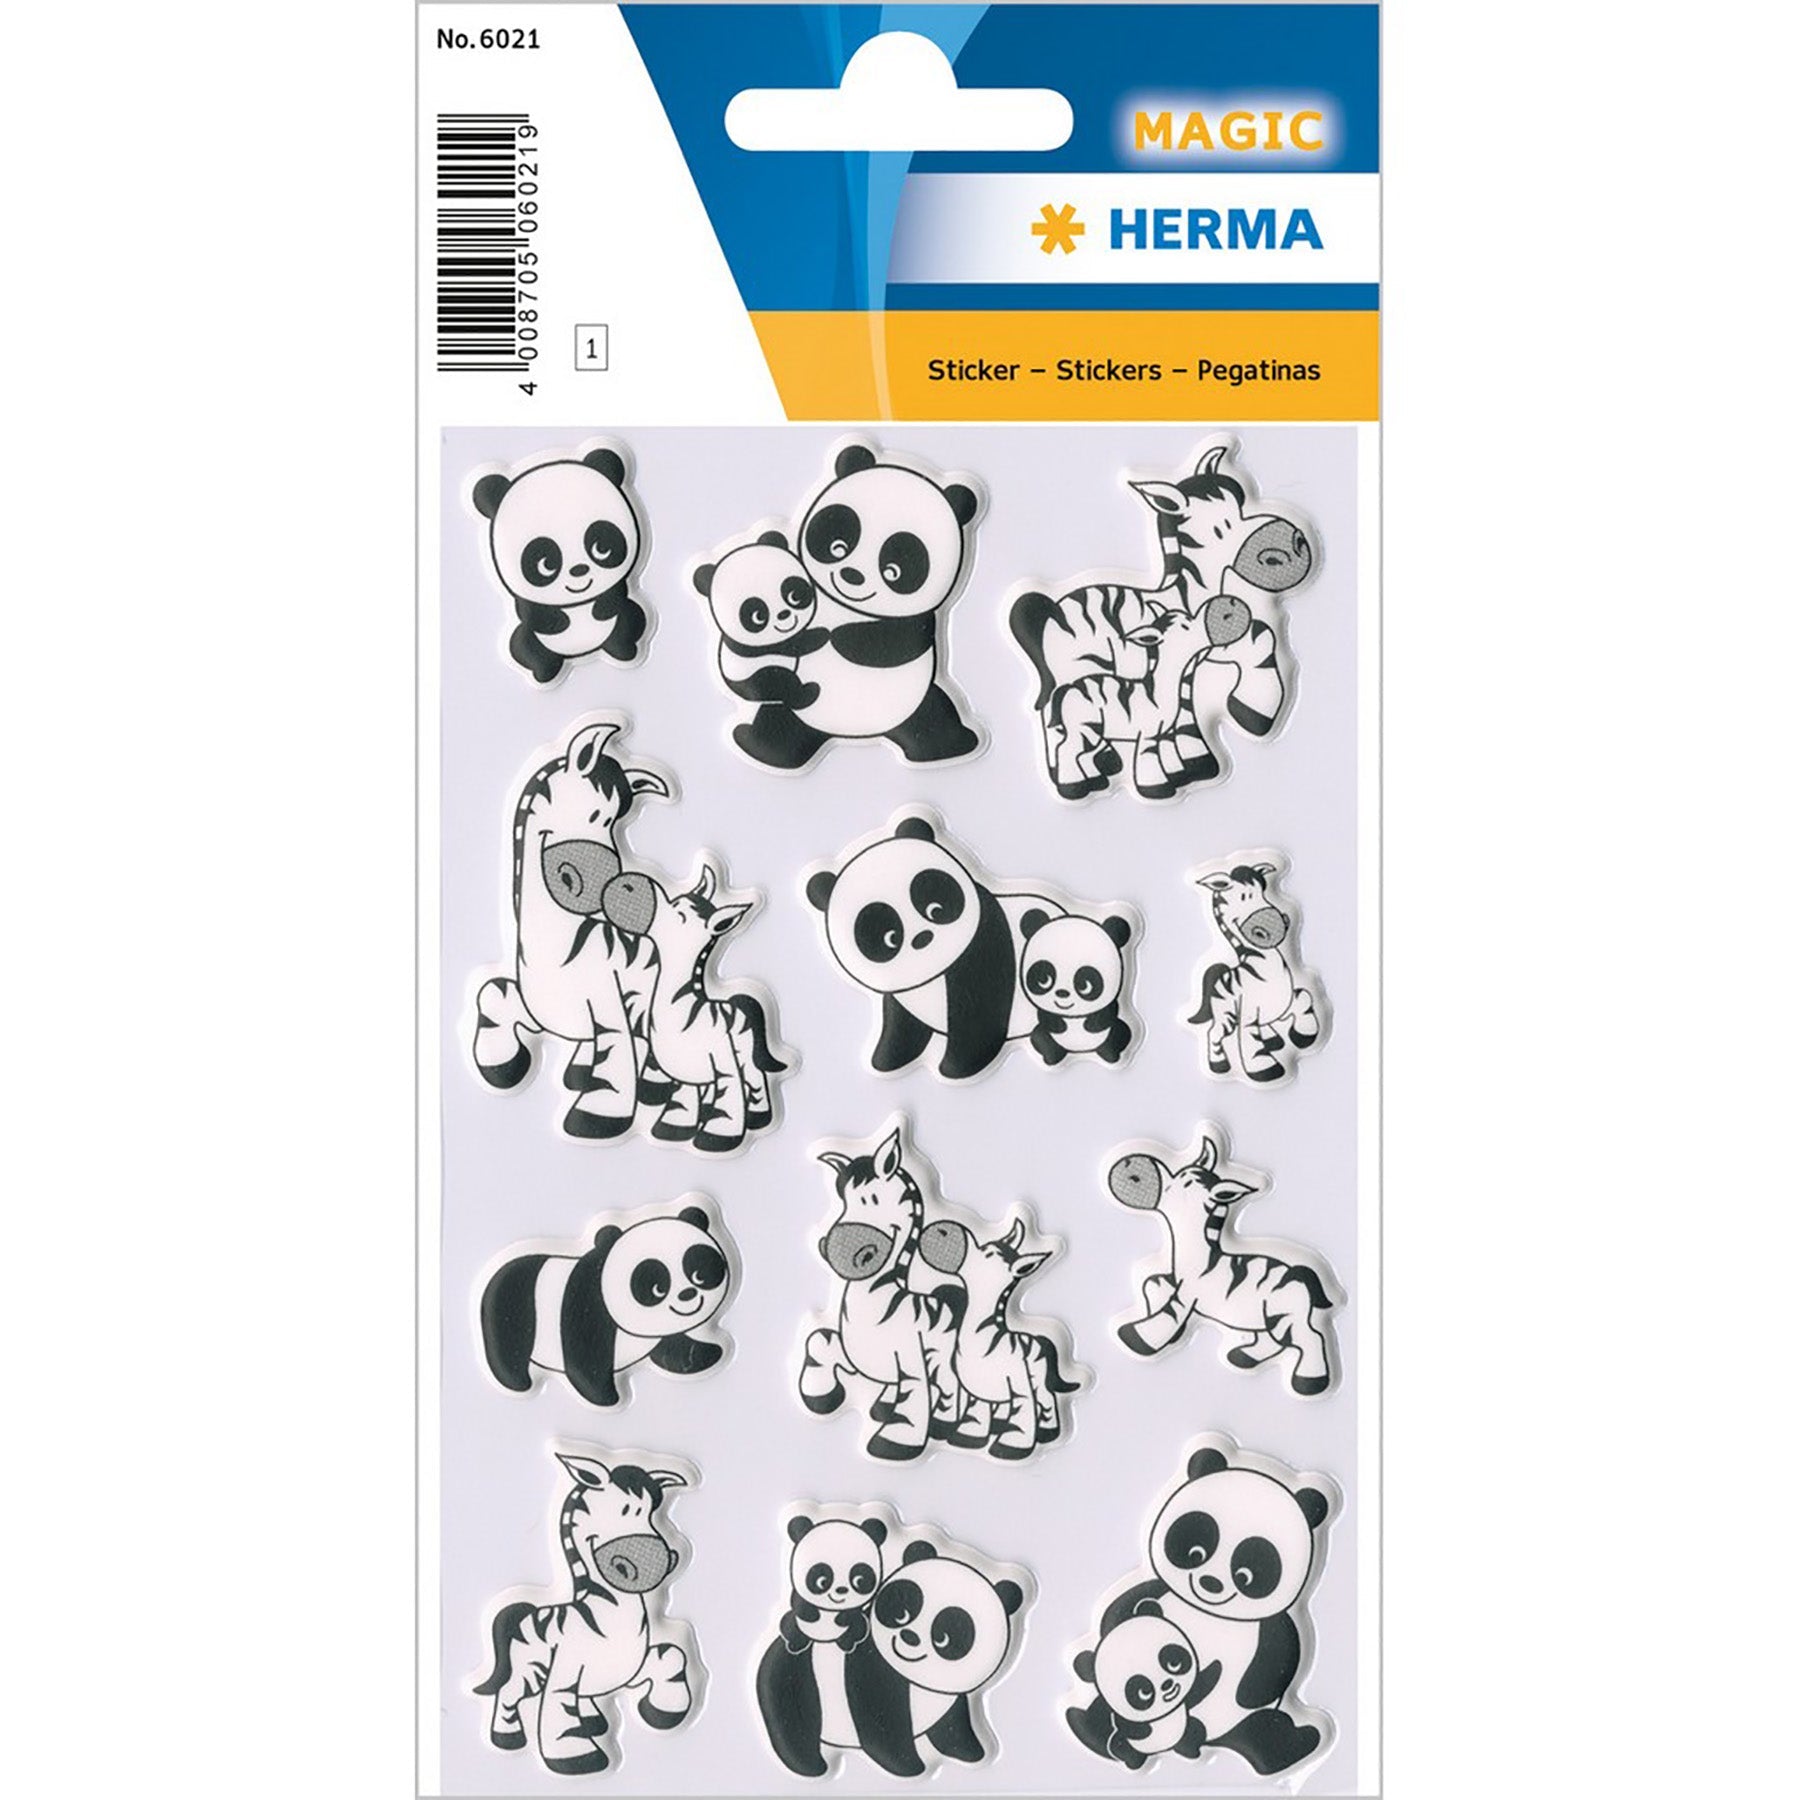 Herma Magic Stickers Panda and Zebra Families Foam 4.75x3.1in Sheet